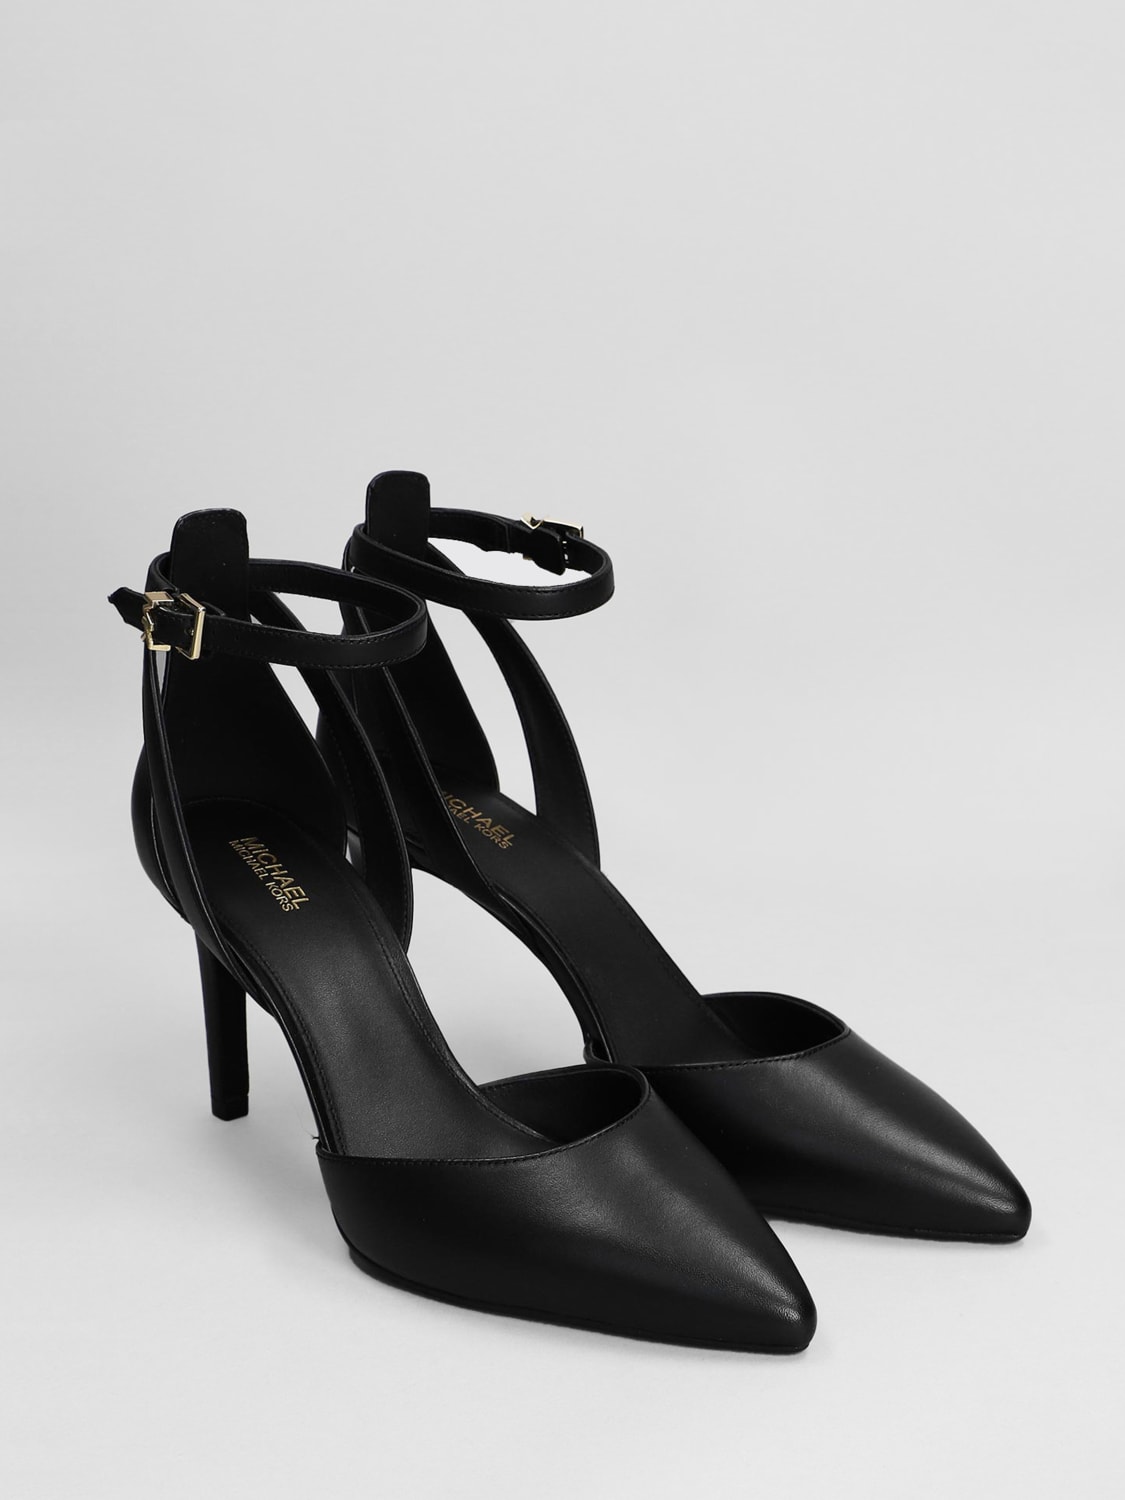 MICHAEL KORS: high heel shoes woman - Black | Michael Kors heel shoes online on GIGLIO.COM